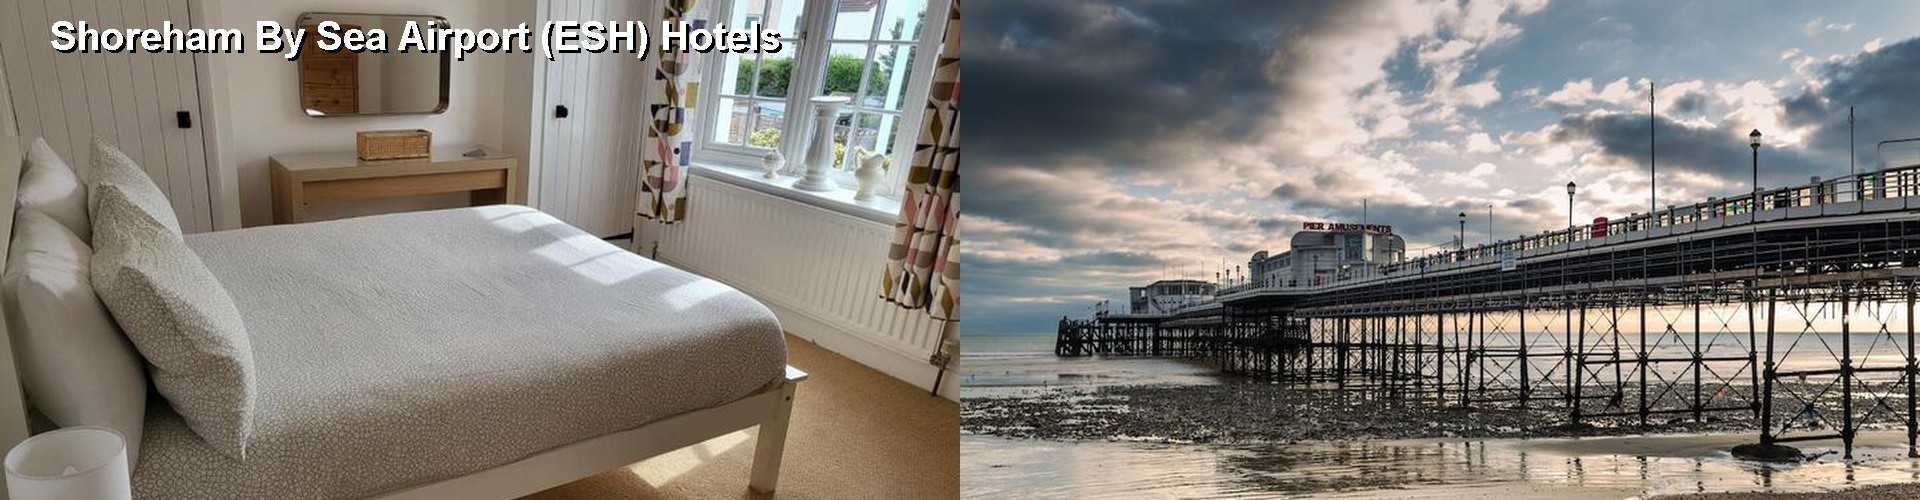 4 Best Hotels near Shoreham By Sea Airport (ESH)